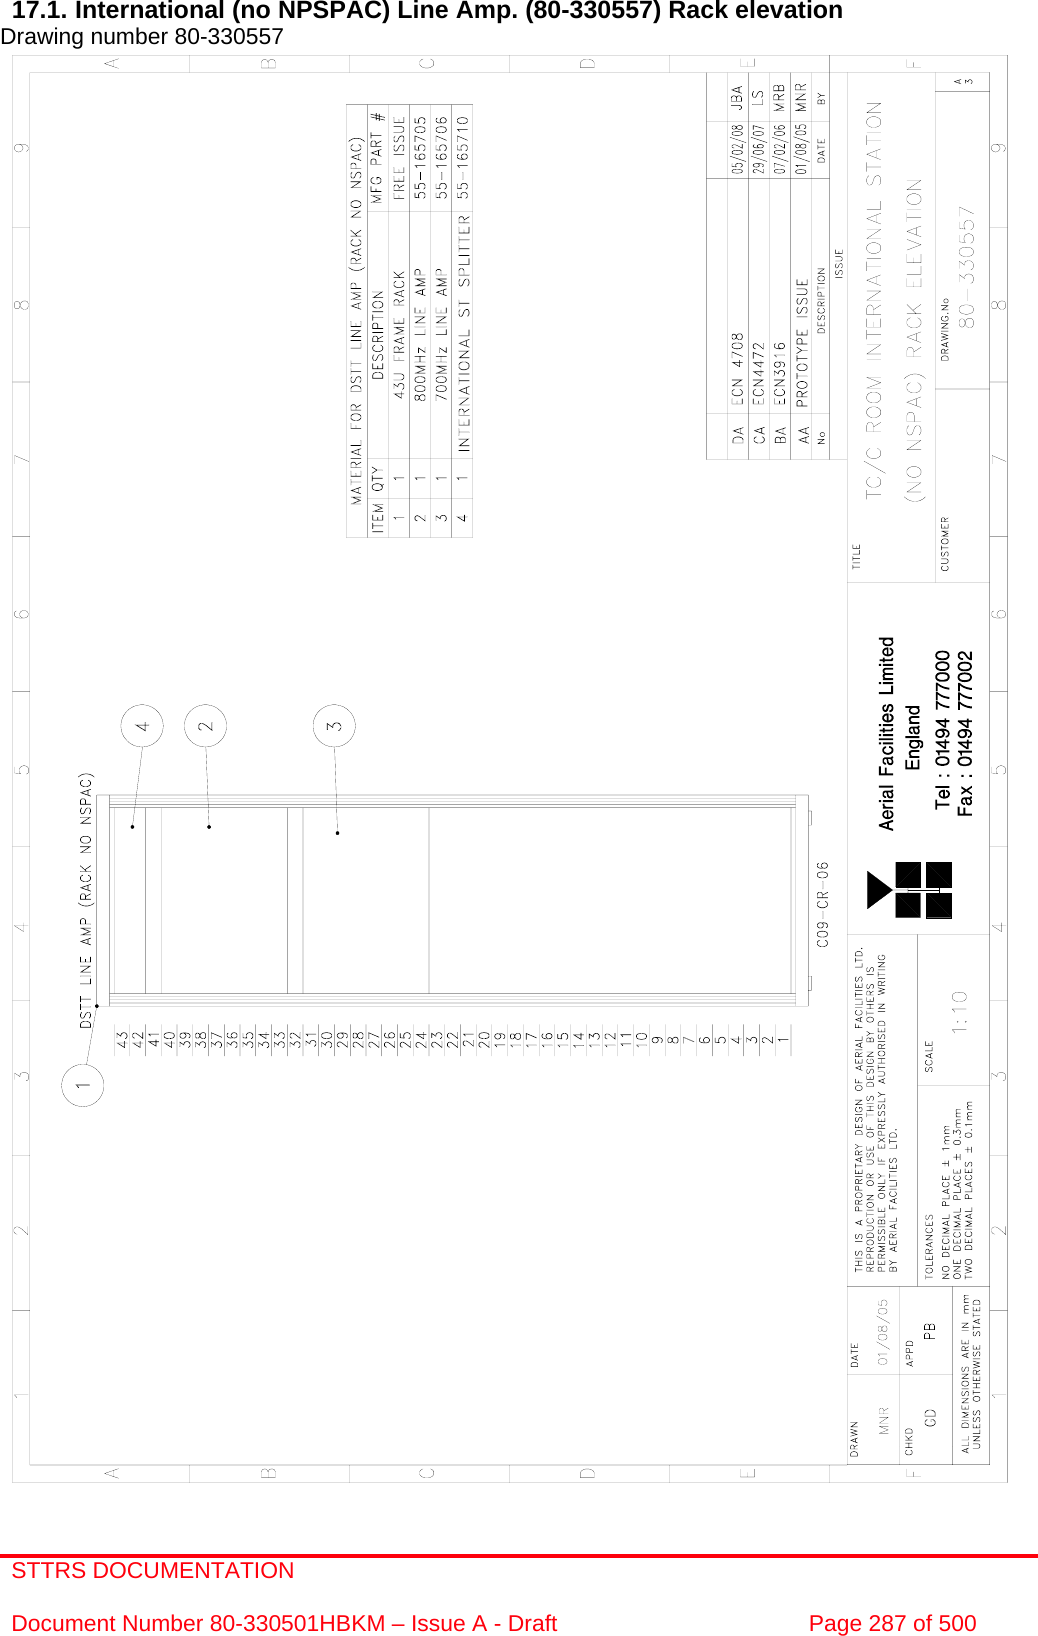 STTRS DOCUMENTATION  Document Number 80-330501HBKM – Issue A - Draft  Page 287 of 500   17.1. International (no NPSPAC) Line Amp. (80-330557) Rack elevation Drawing number 80-330557                                                       